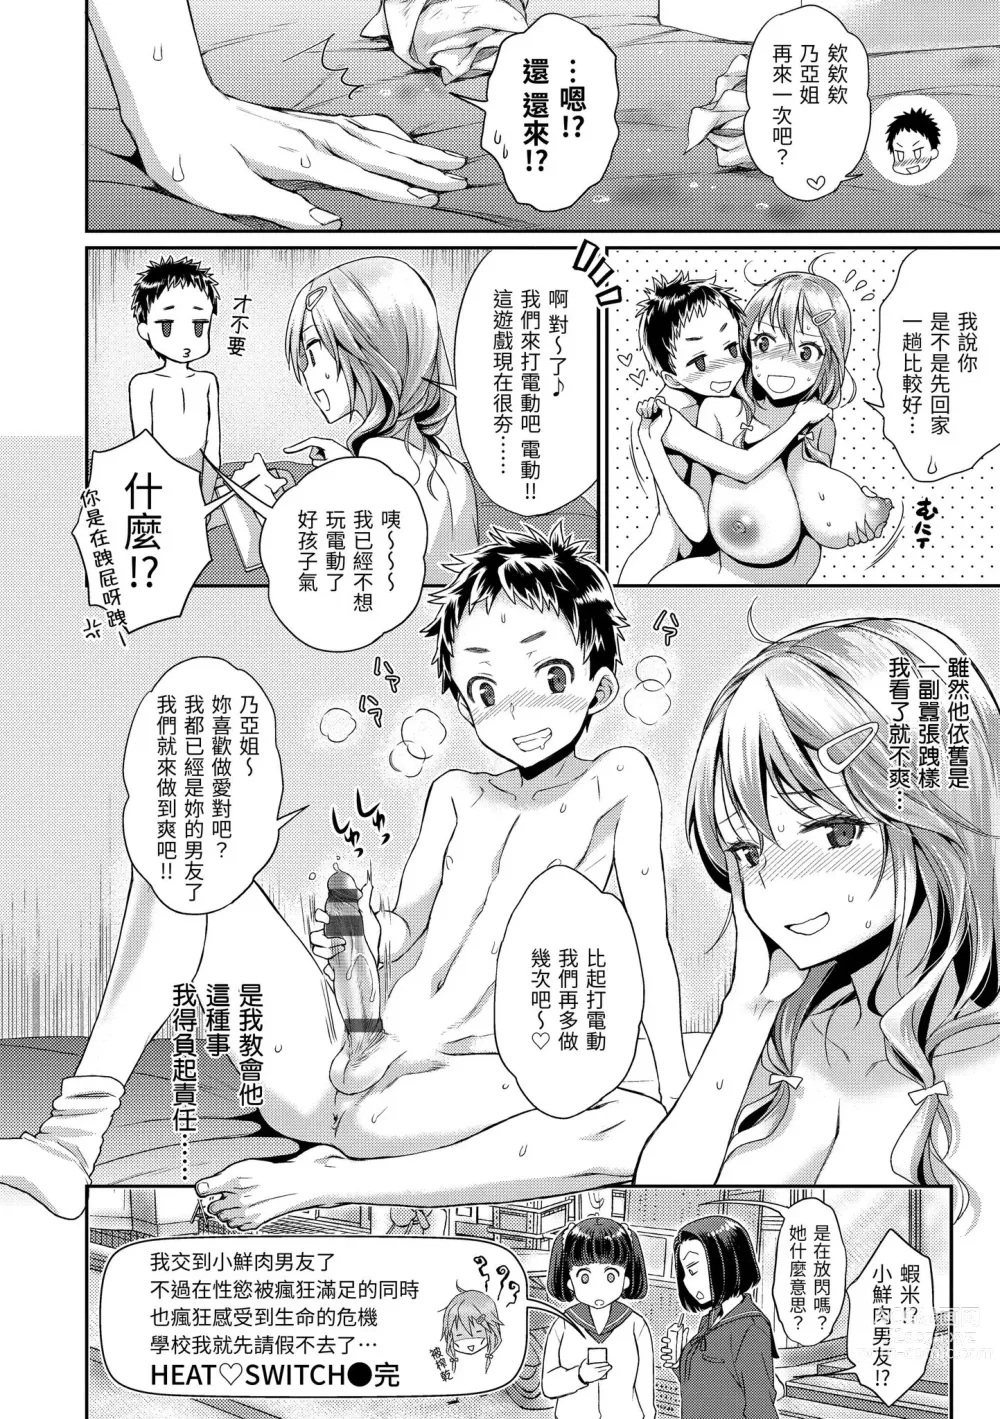 Page 162 of manga 放蕩甜心